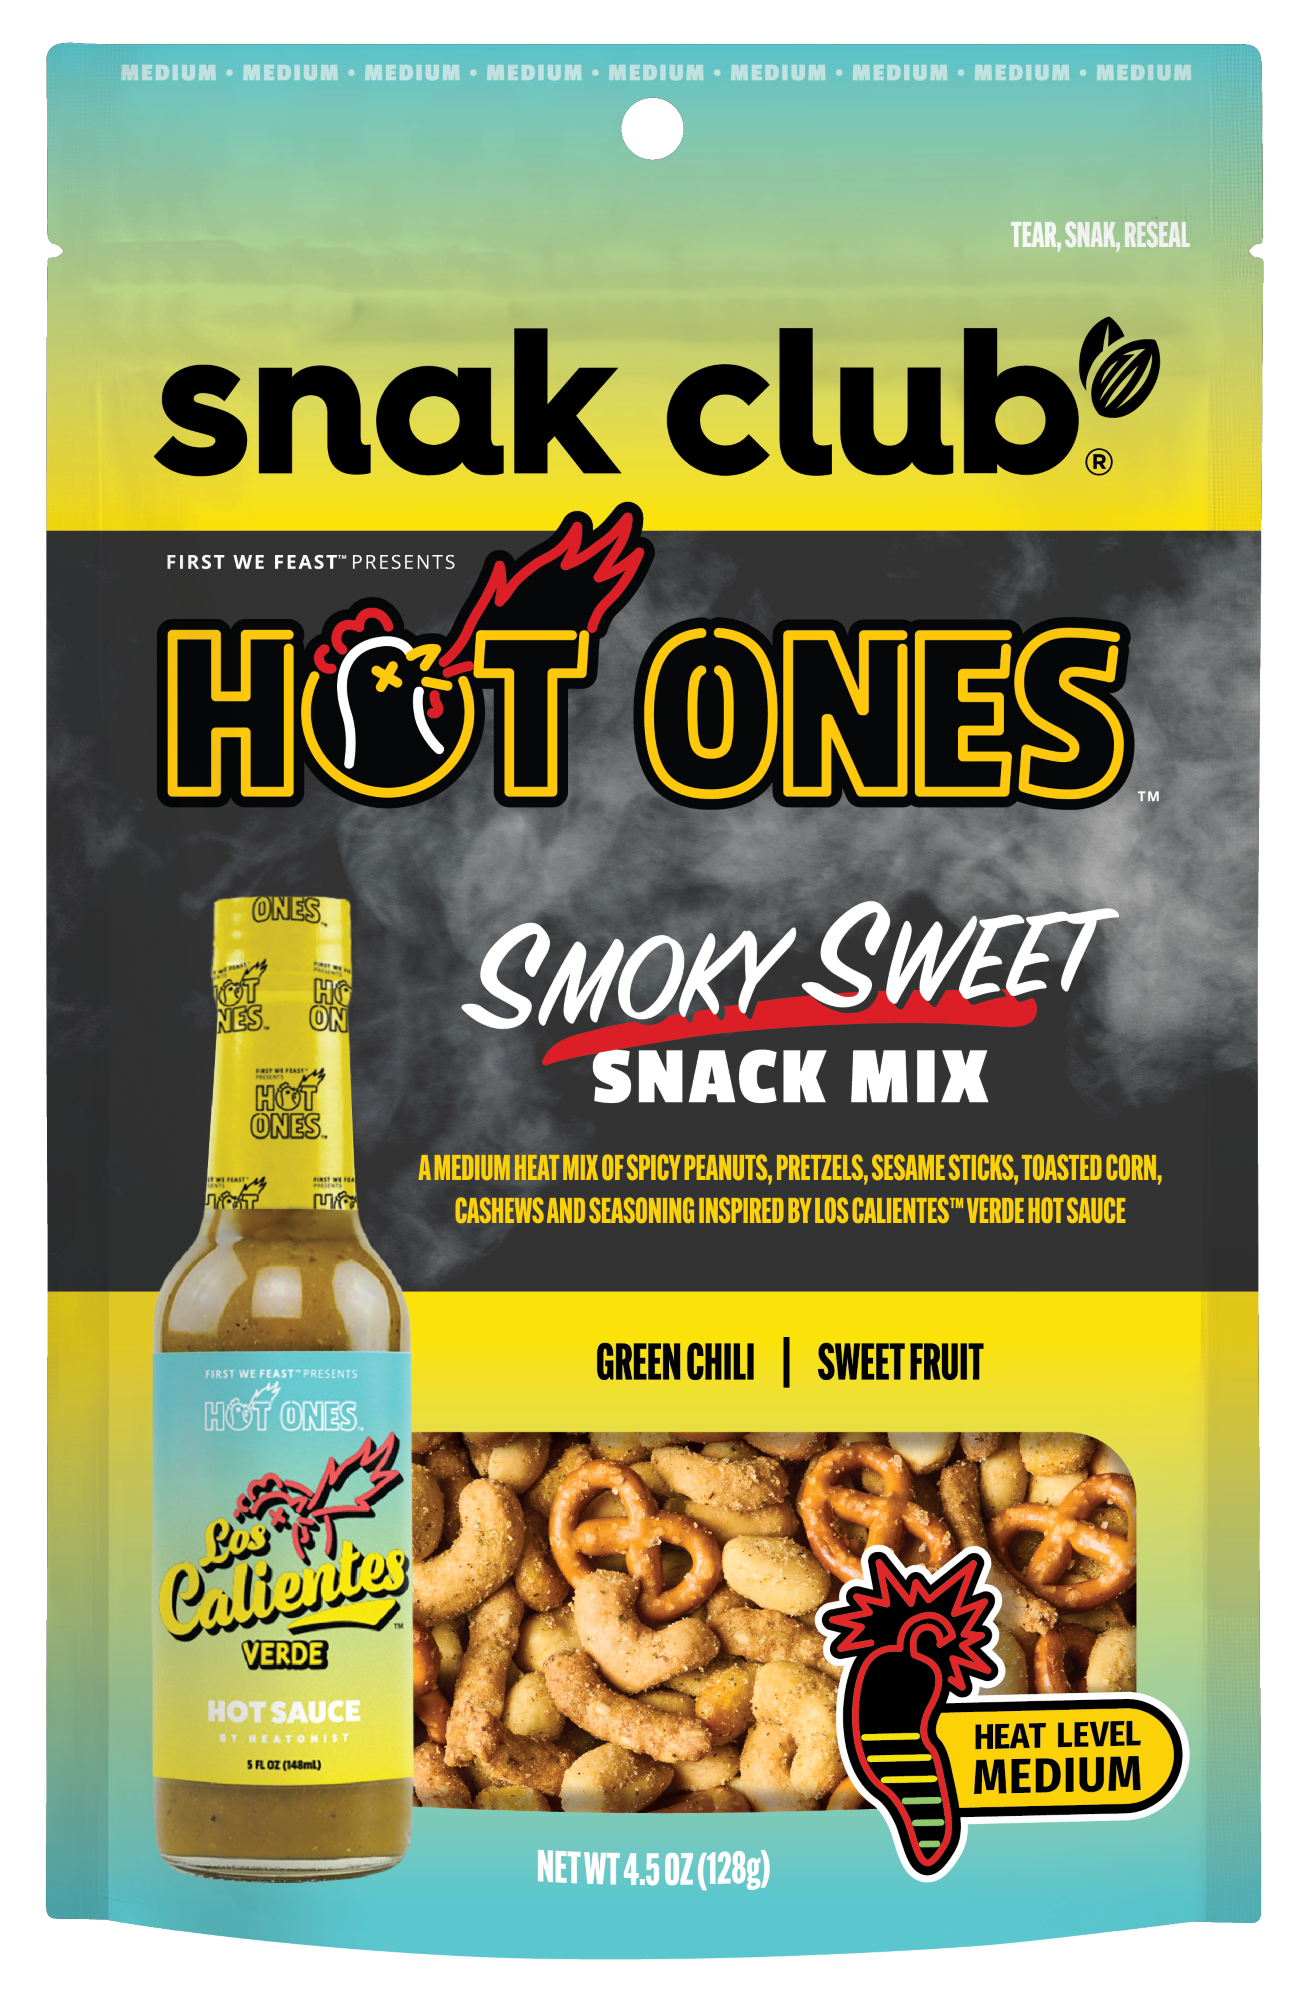 Snak club hot ones smoky sweet 4.5oz